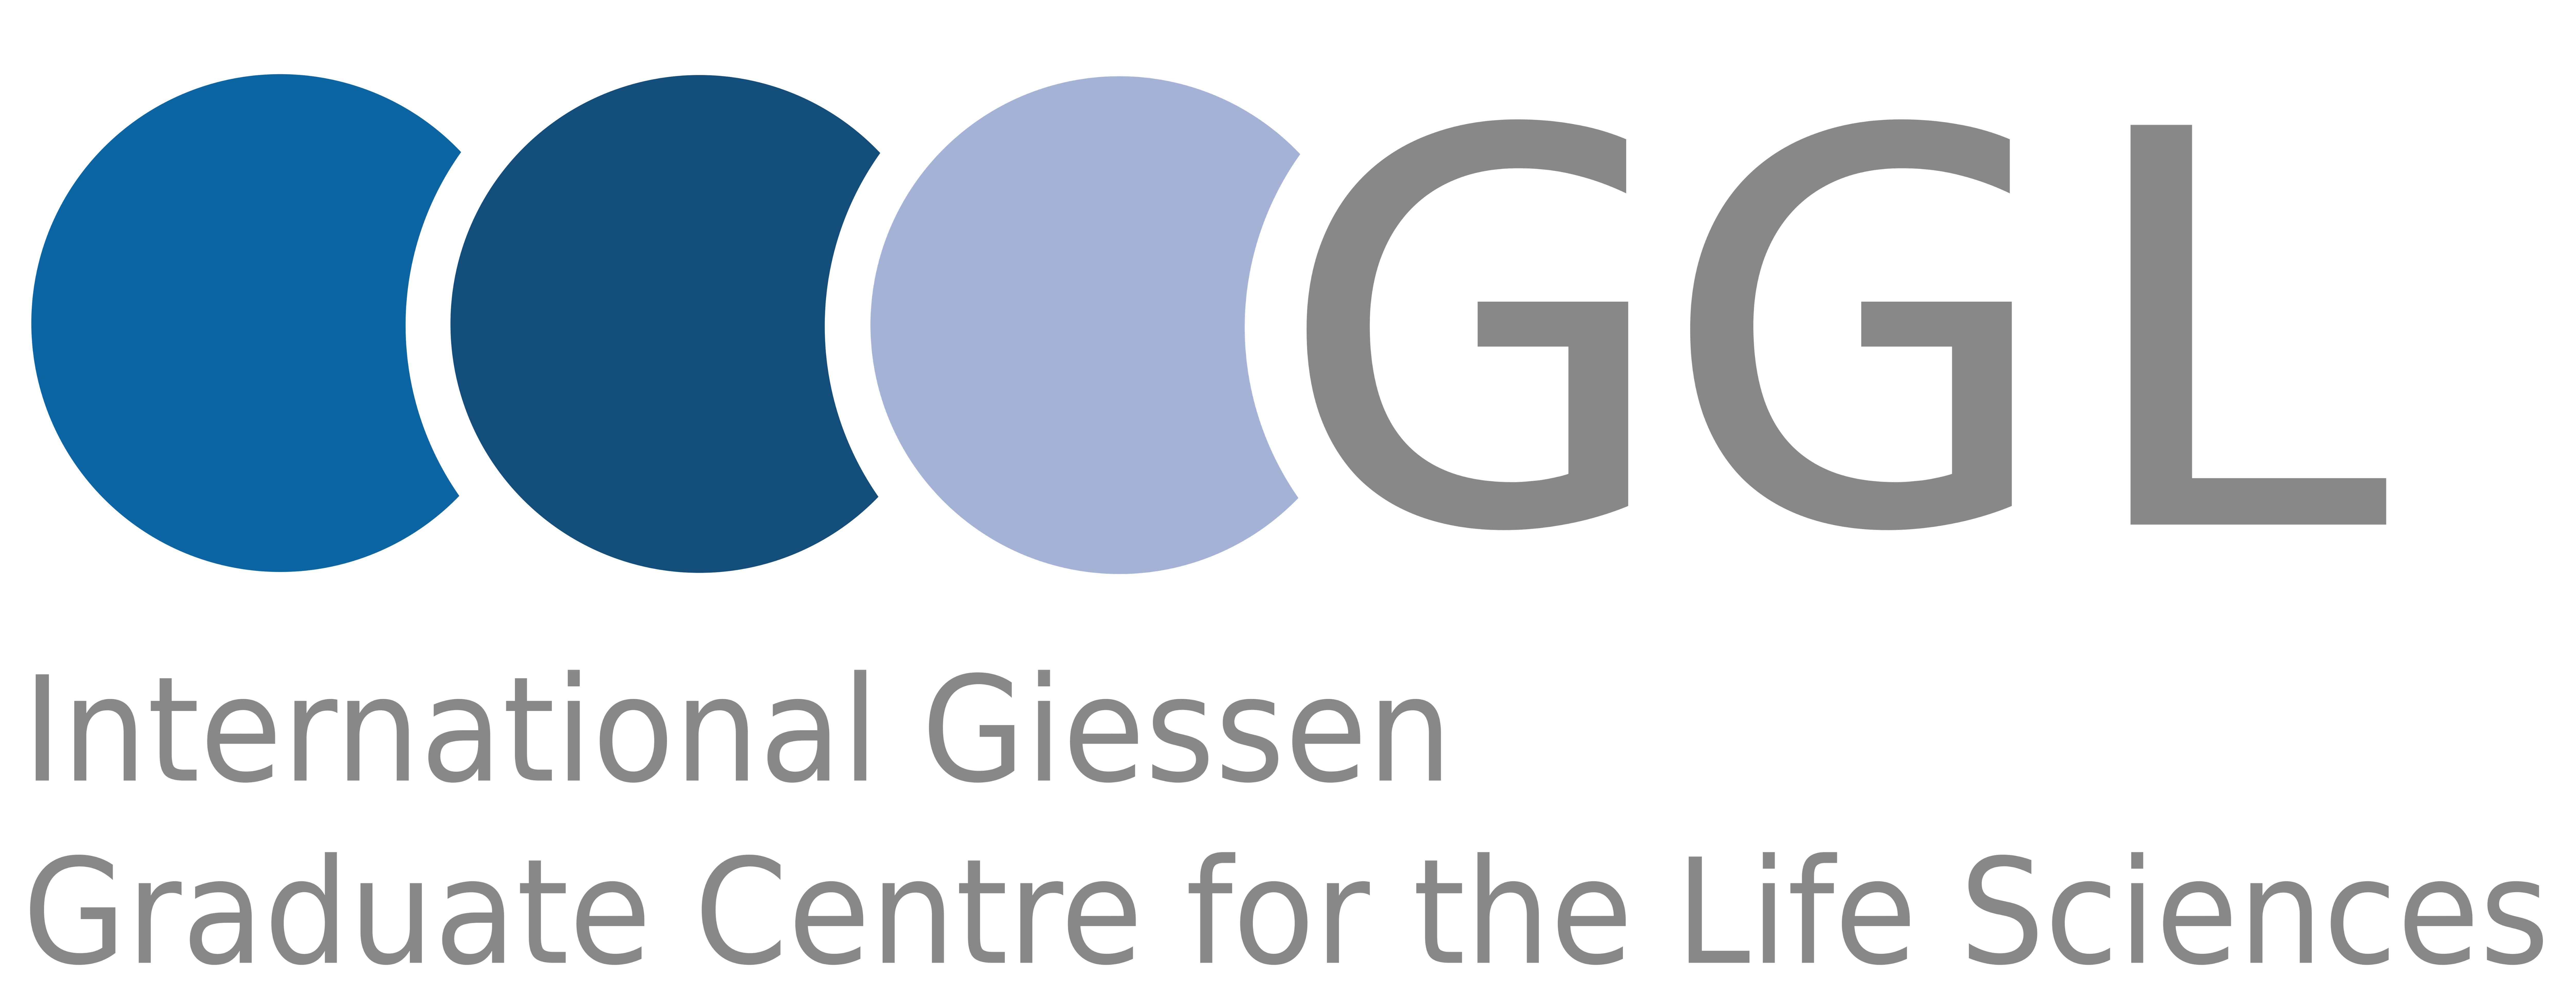 GGL Logo